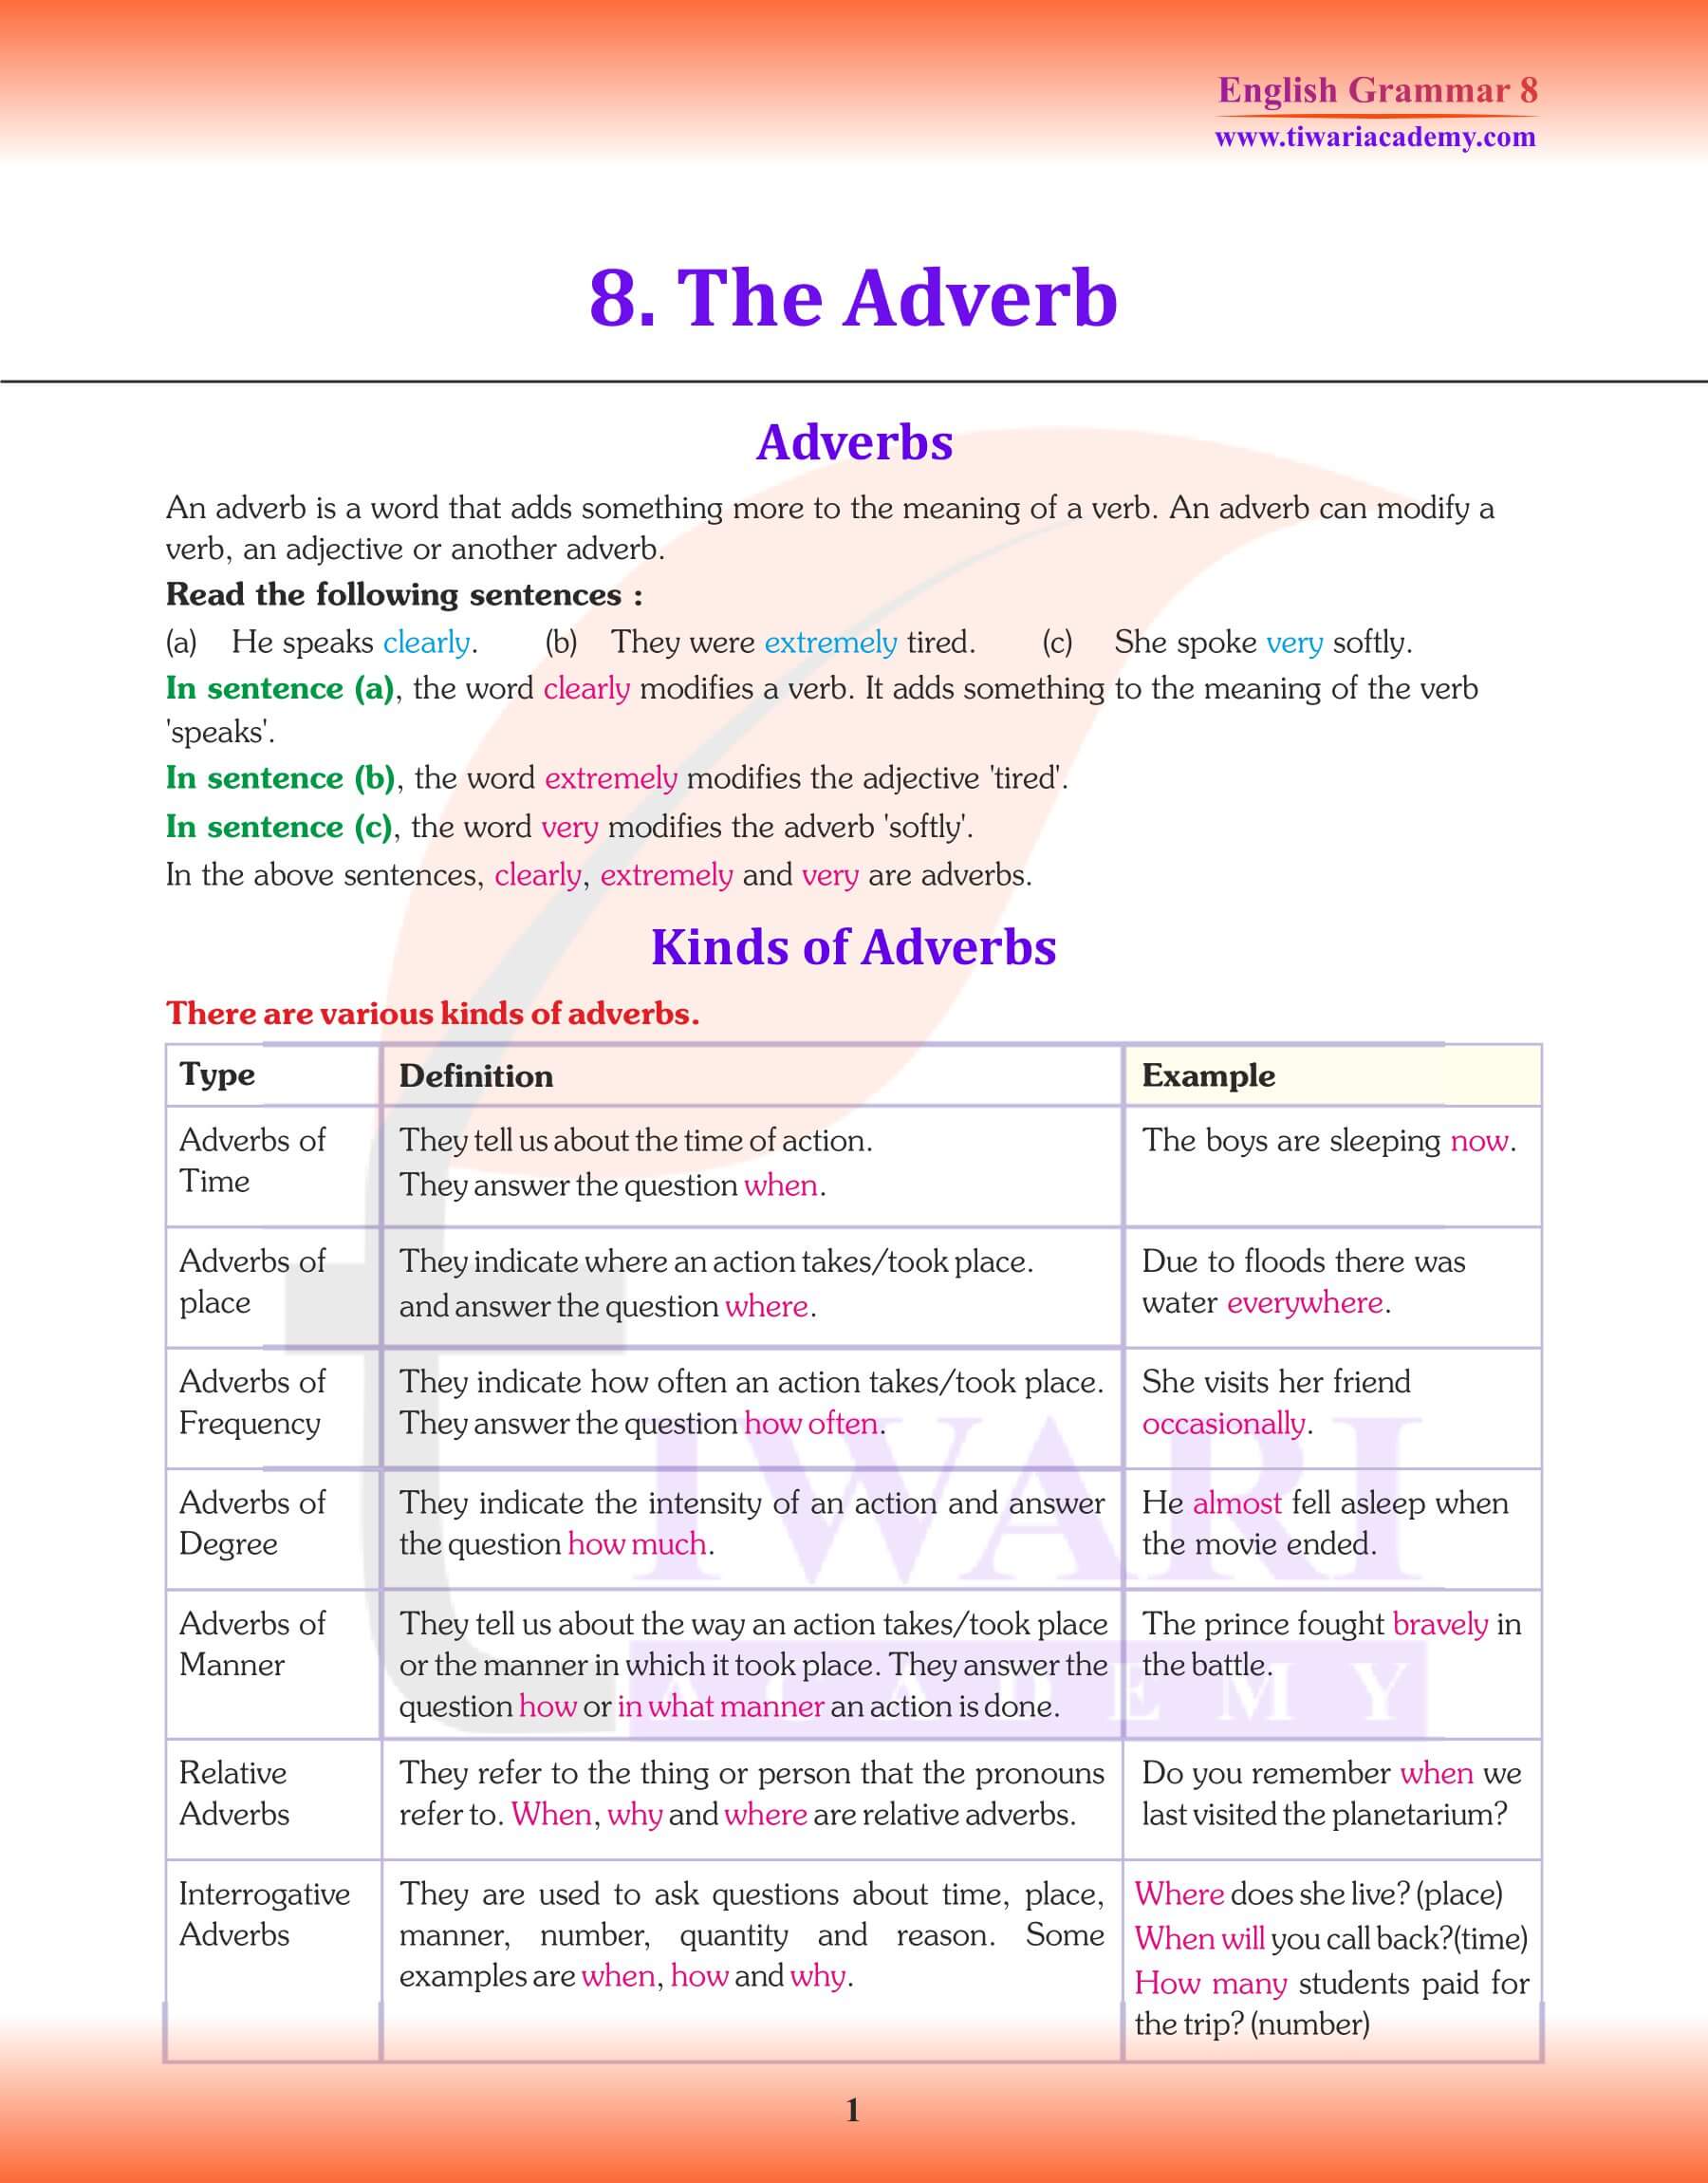 Class 8 English Grammar Adverb Revision Book